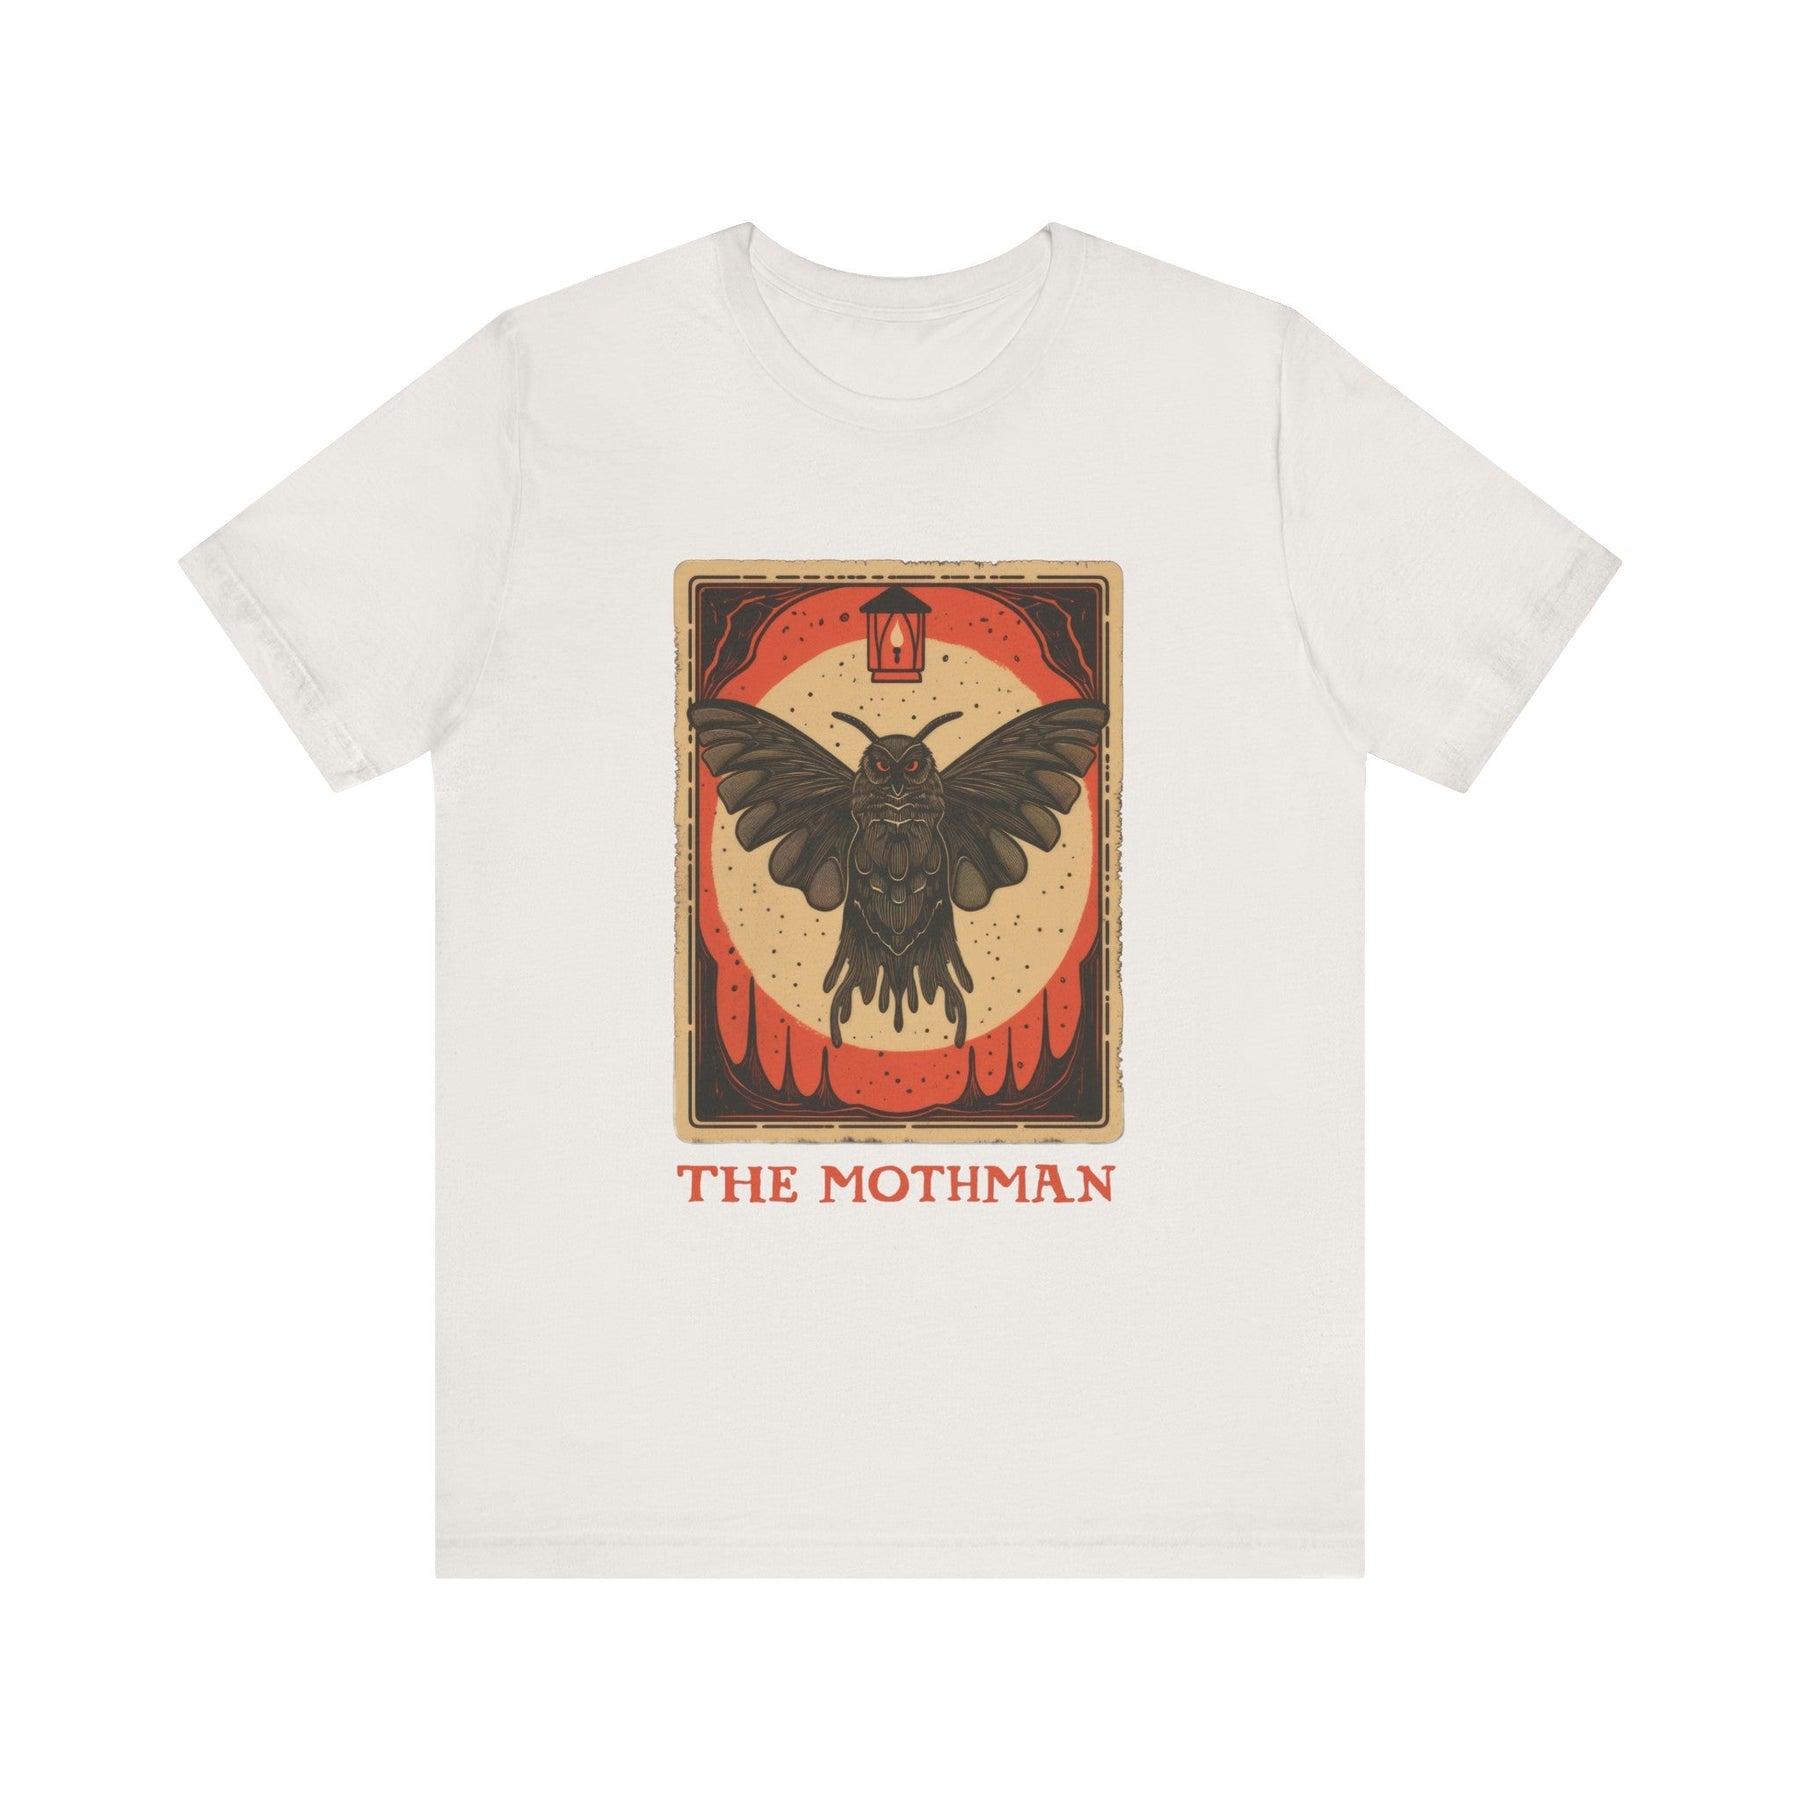 Mothman Tarot Card T - Shirt - Goth Cloth Co.T - Shirt23050661810311593881